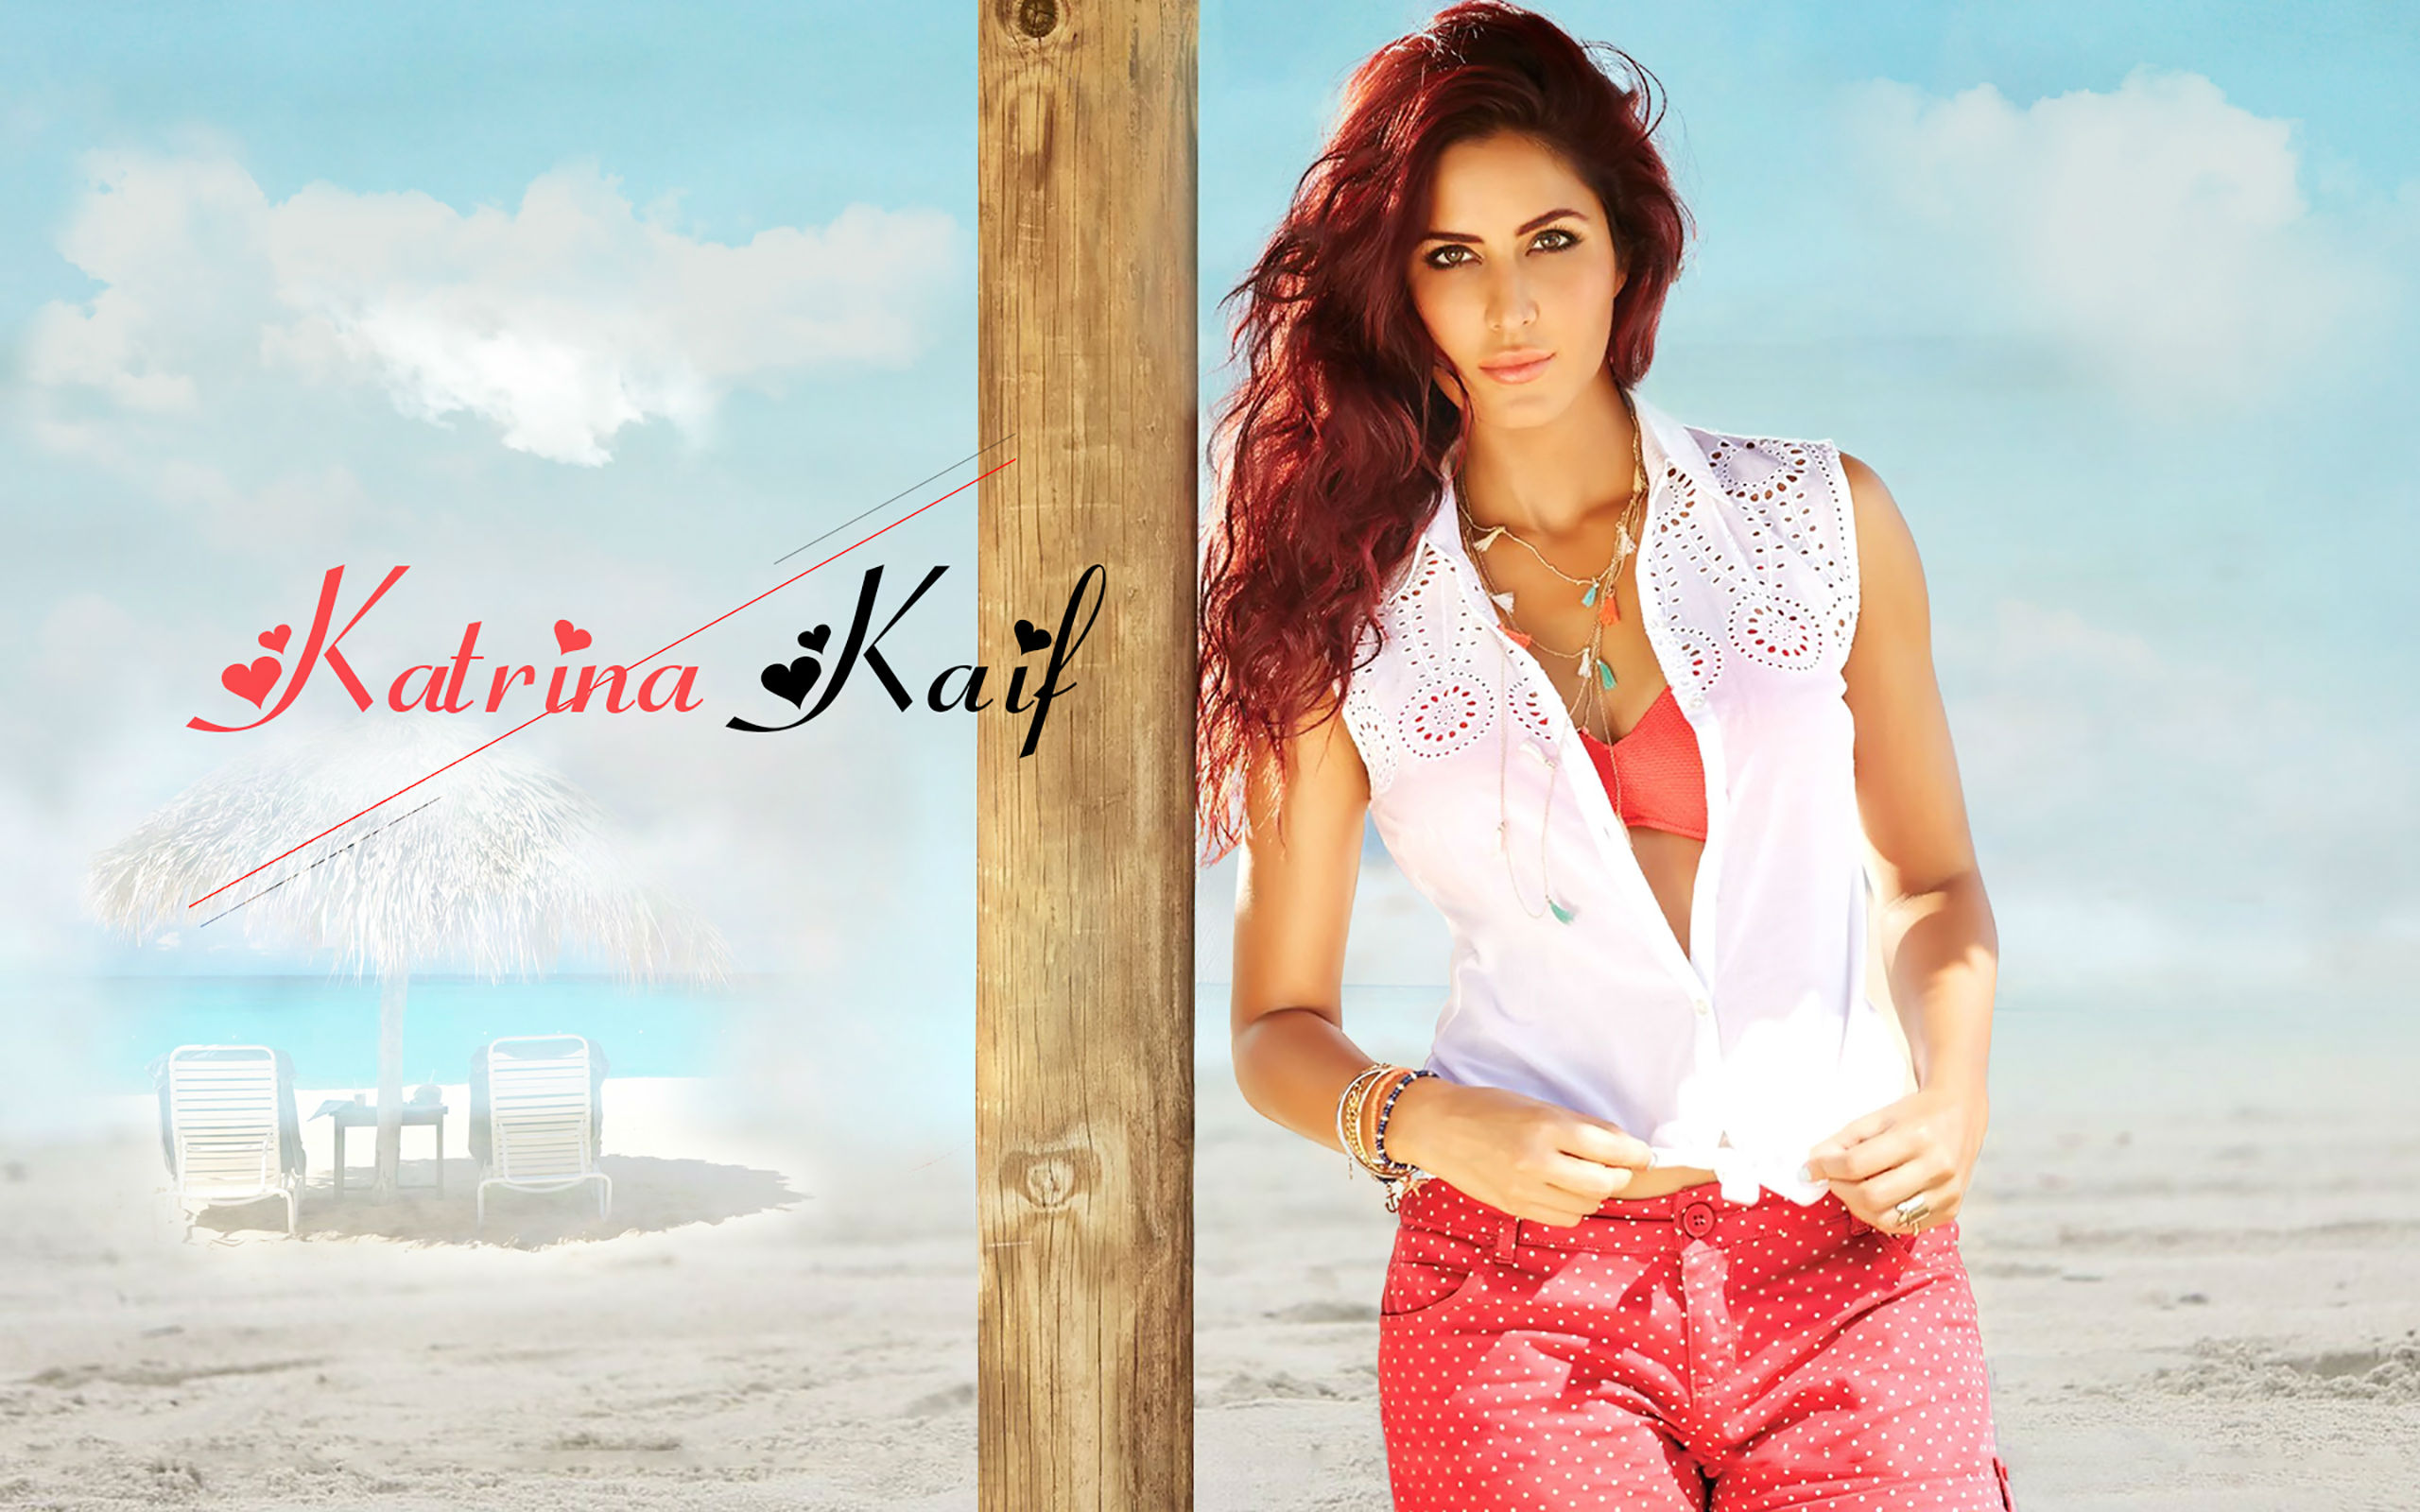 Katrina Kaif Beautiful HD Wallpaper Image Pics 1080p